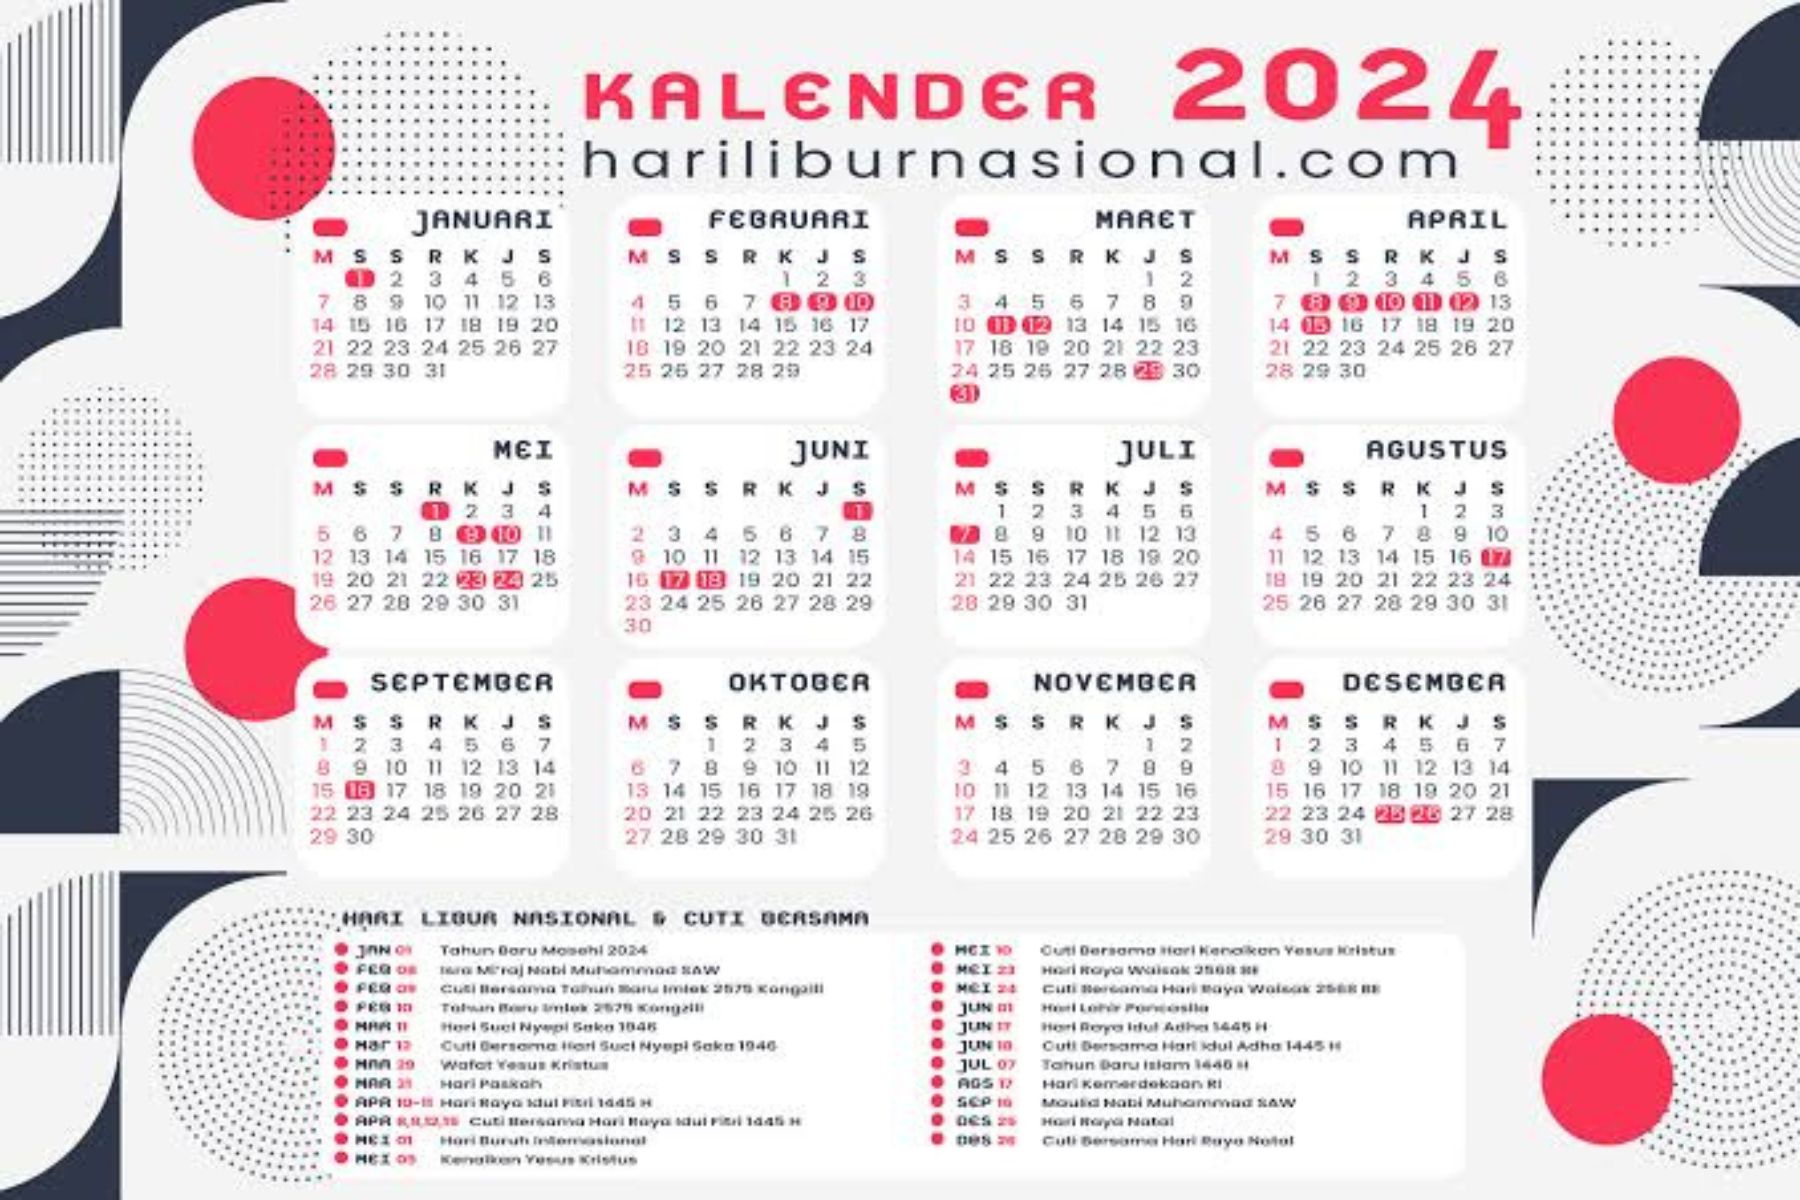 Jadwal Cuti Bersama dan Libur Tahun 2024 di Kalender, Bulan Februari